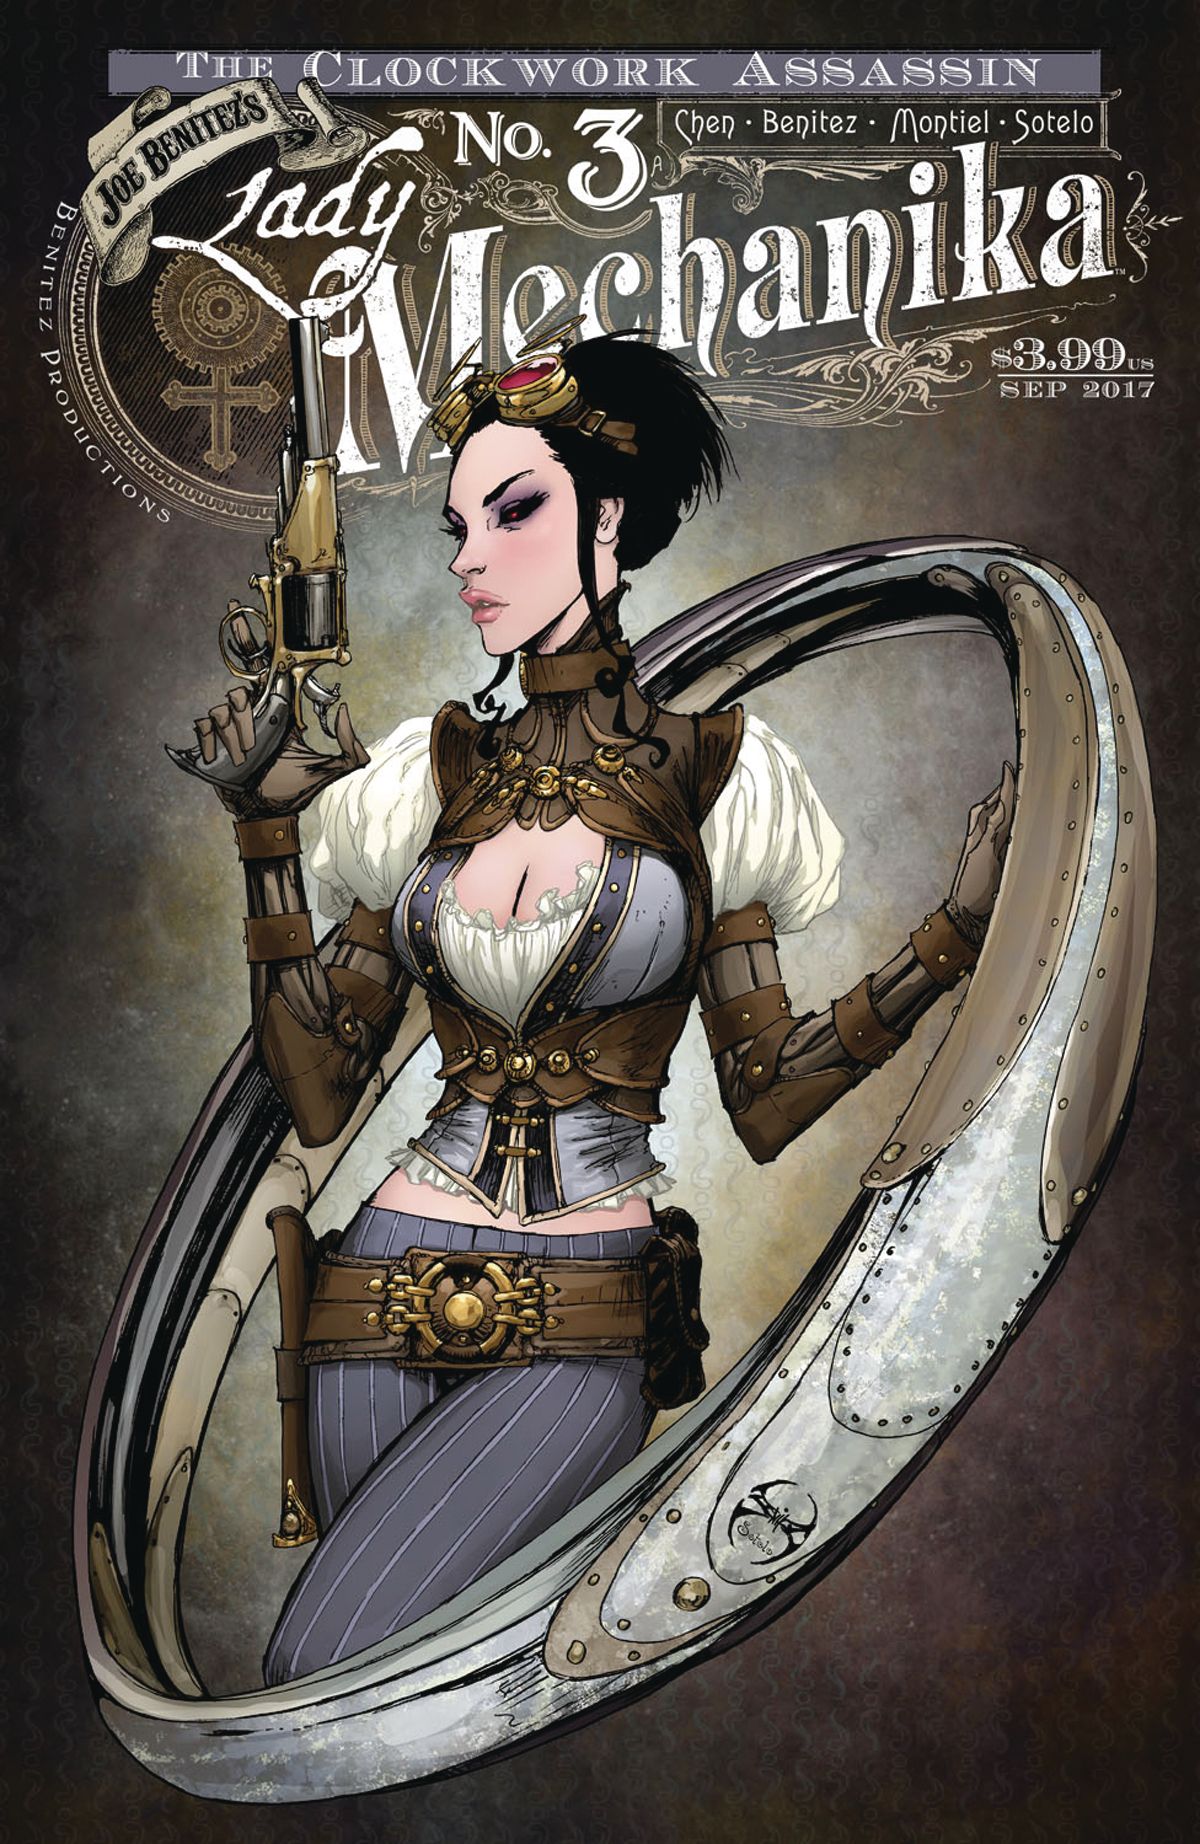 Lady Mechanika: The Clockwork Assassin #3 Comic